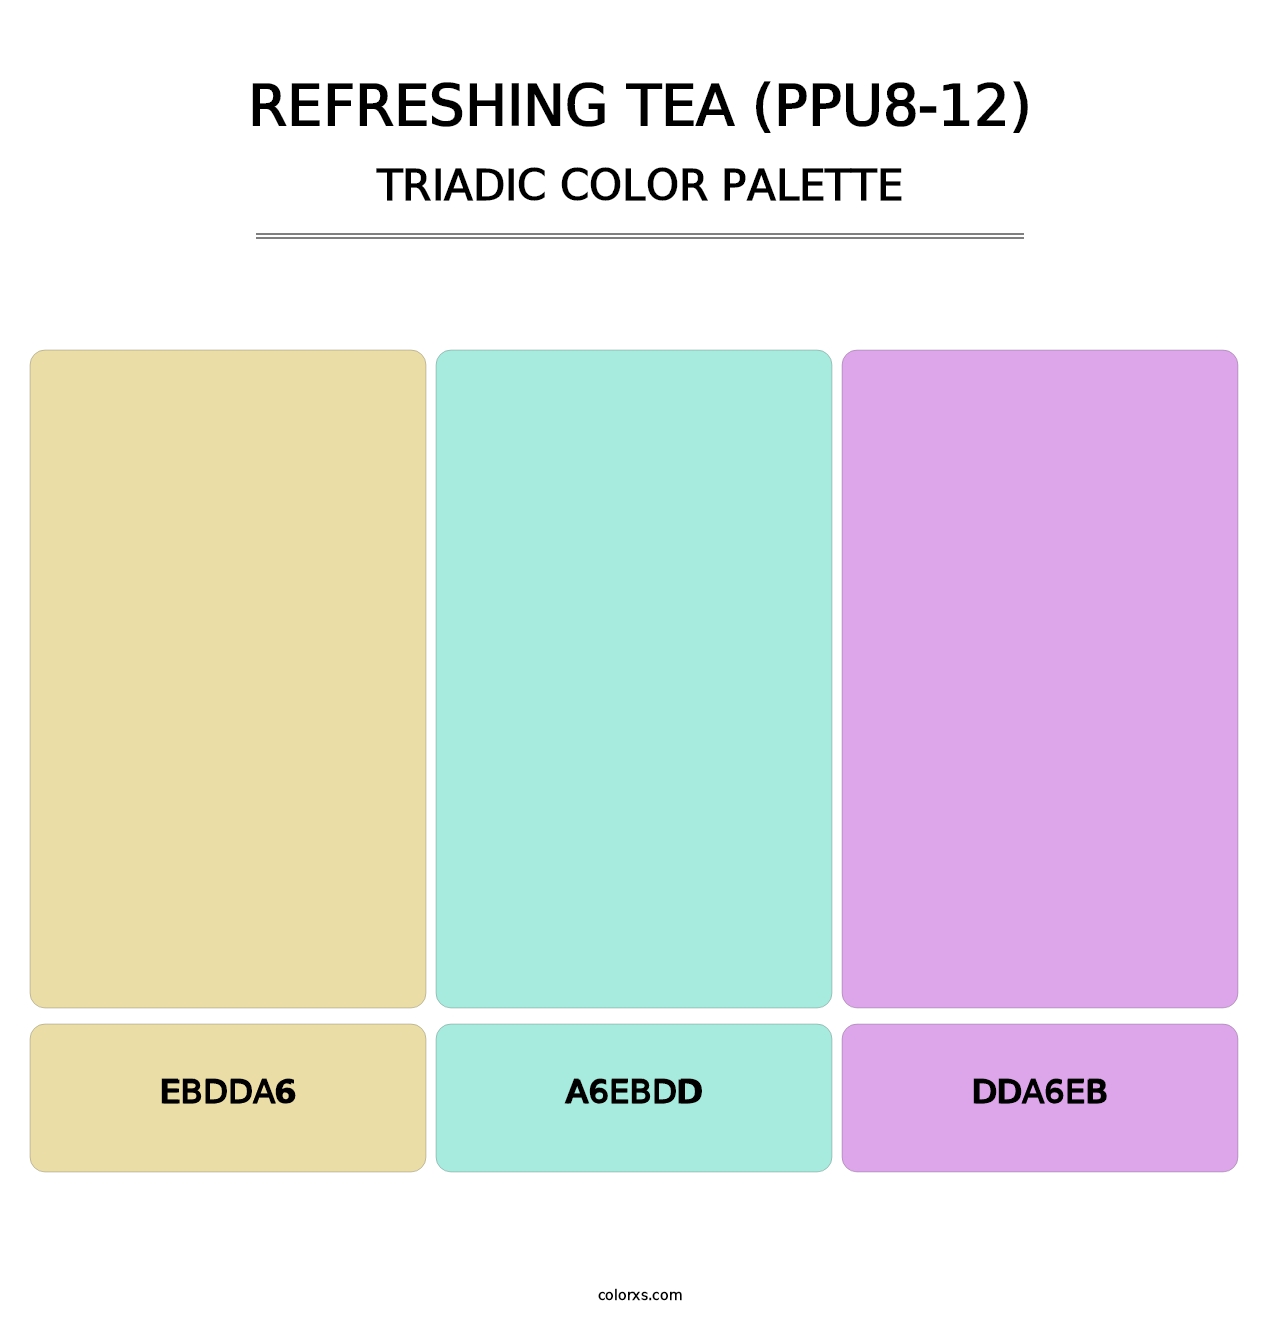 Refreshing Tea (PPU8-12) - Triadic Color Palette